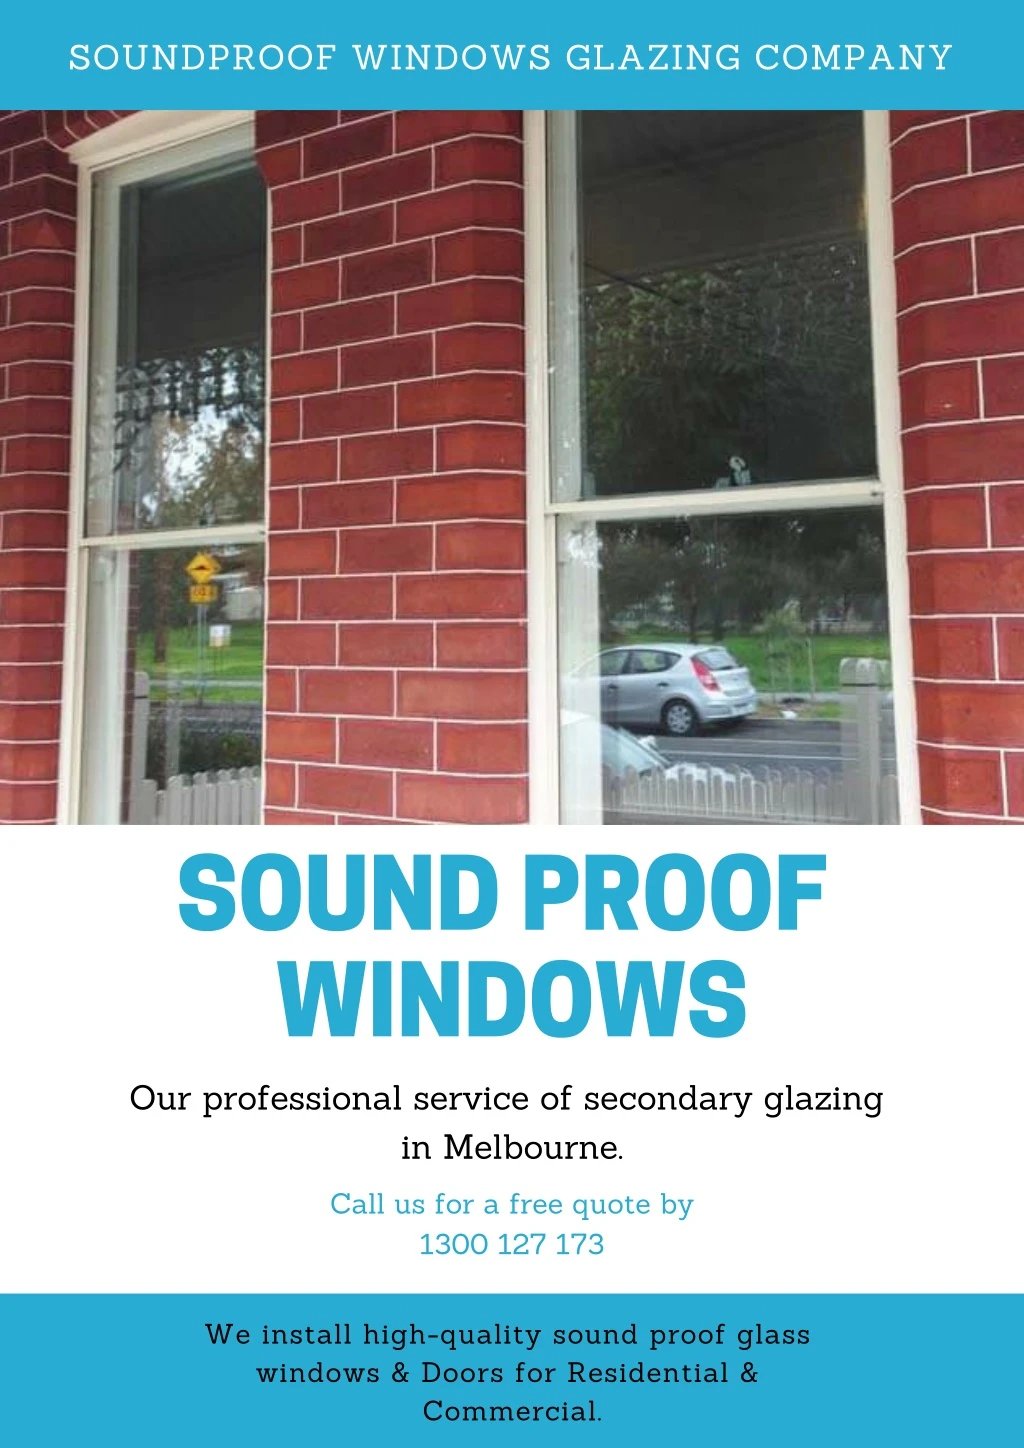 soundproof windows glazing company